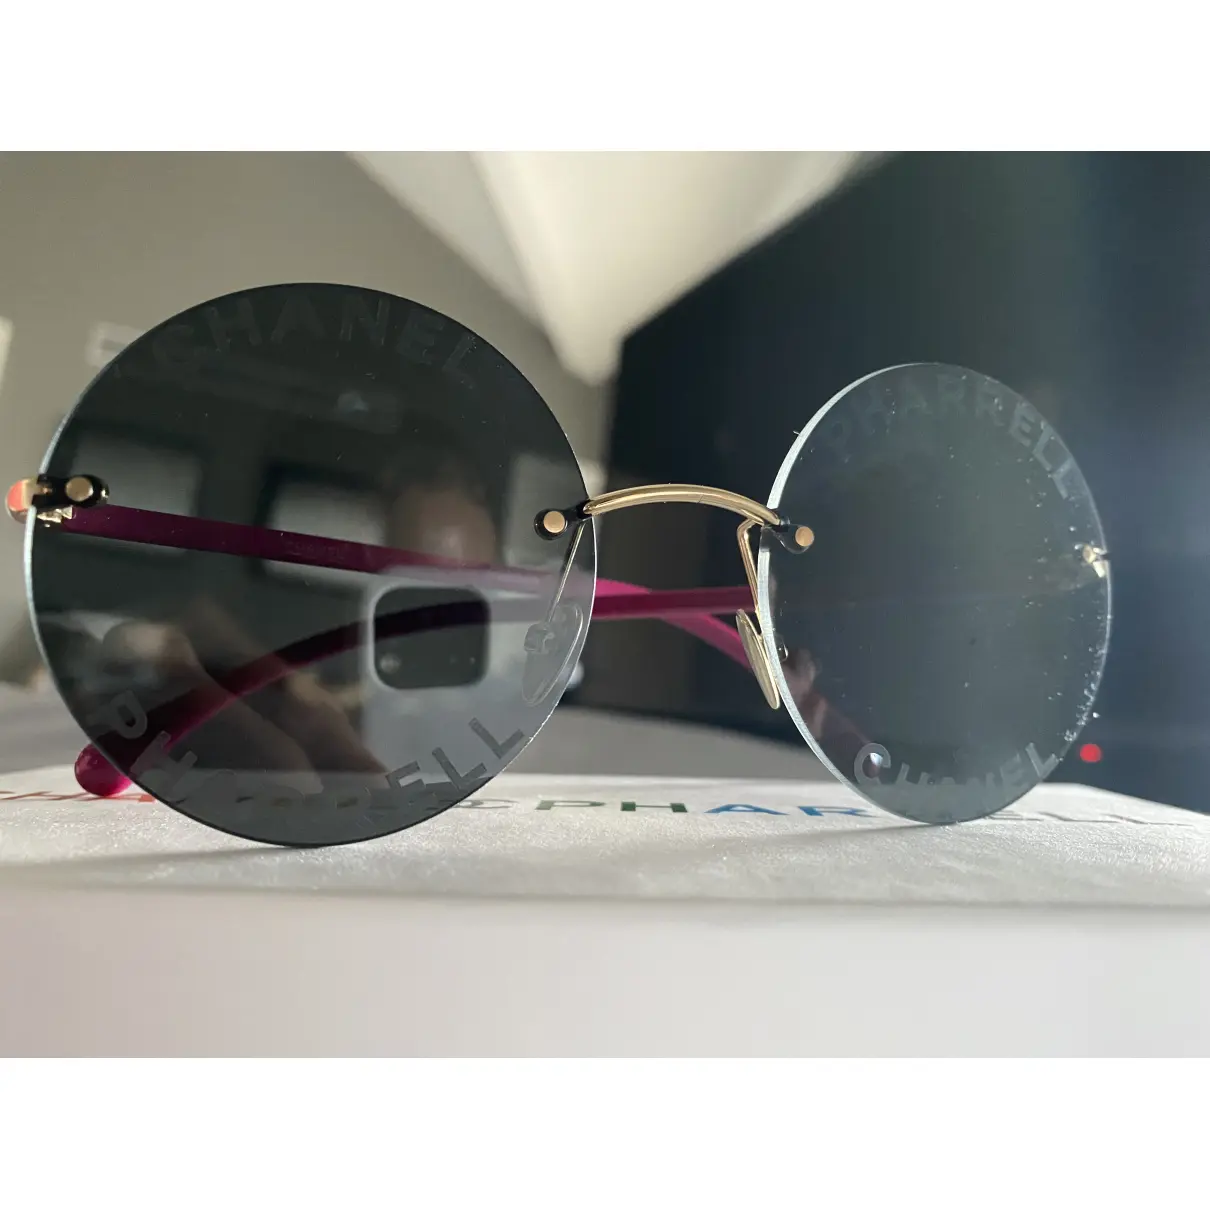 Sunglasses Chanel x Pharrell Williams